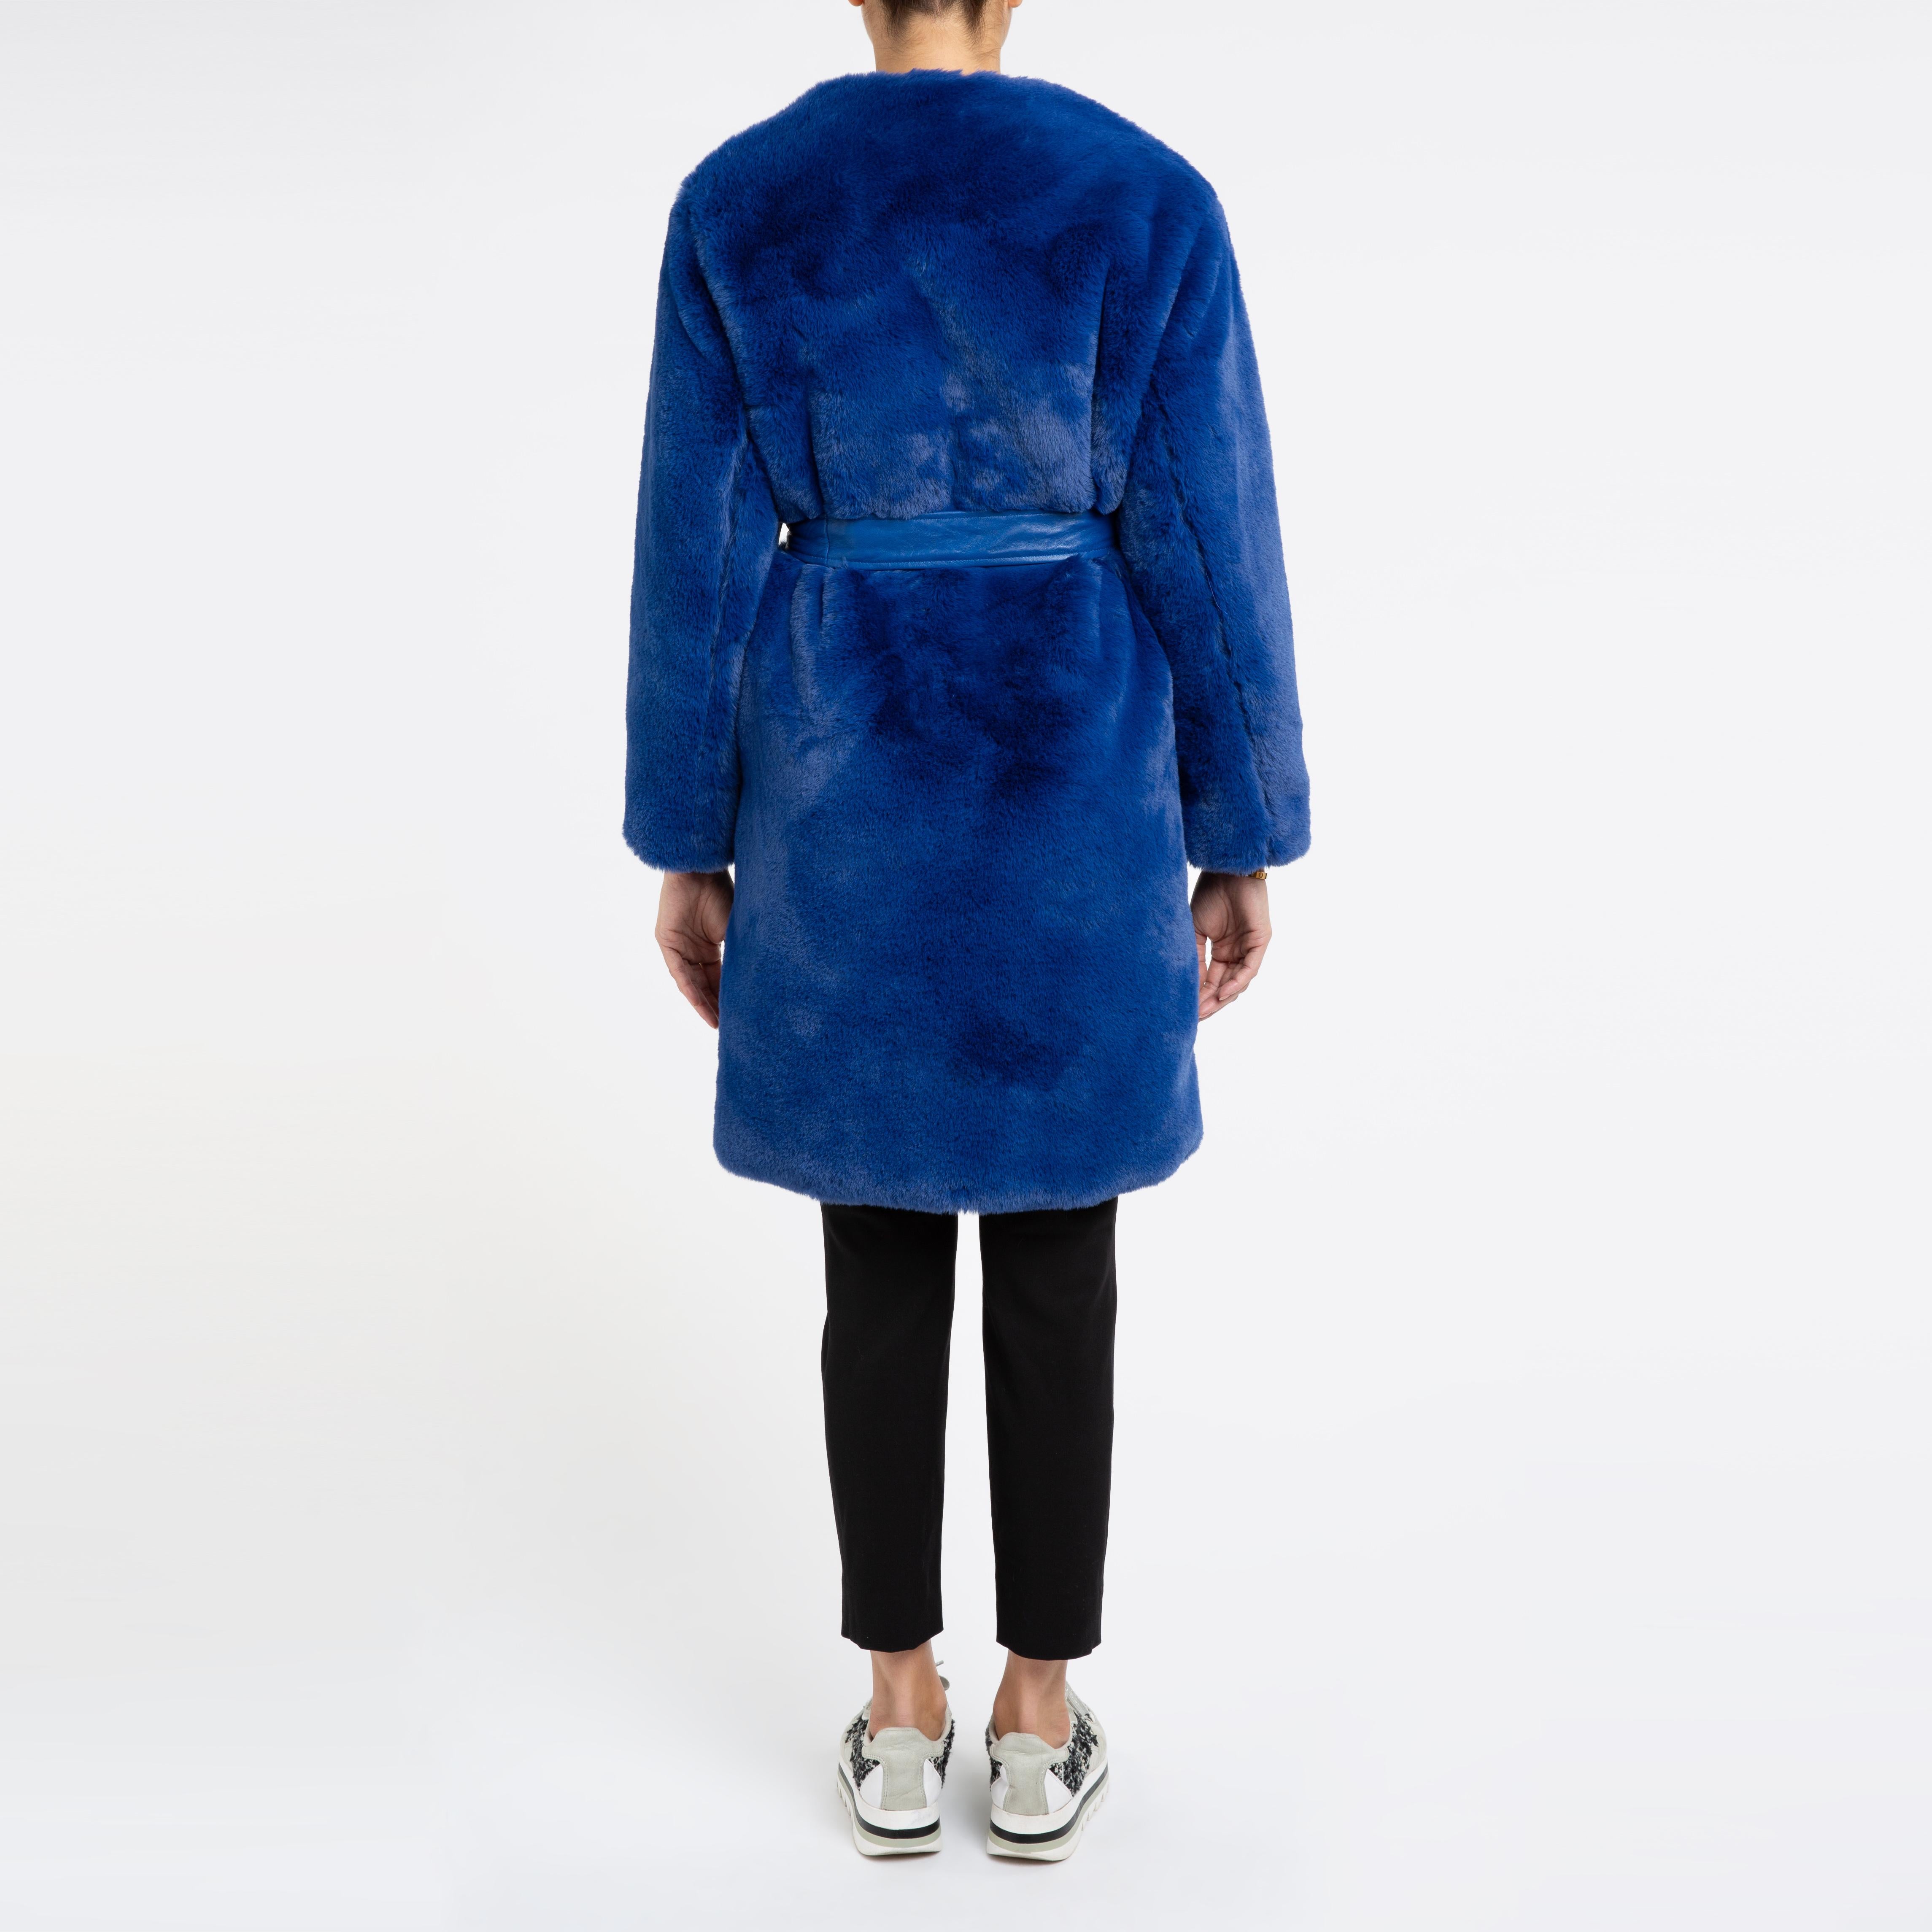 Verheyen London Serena  Collarless Faux Fur Coat in Blue - Size uk 12  For Sale 5